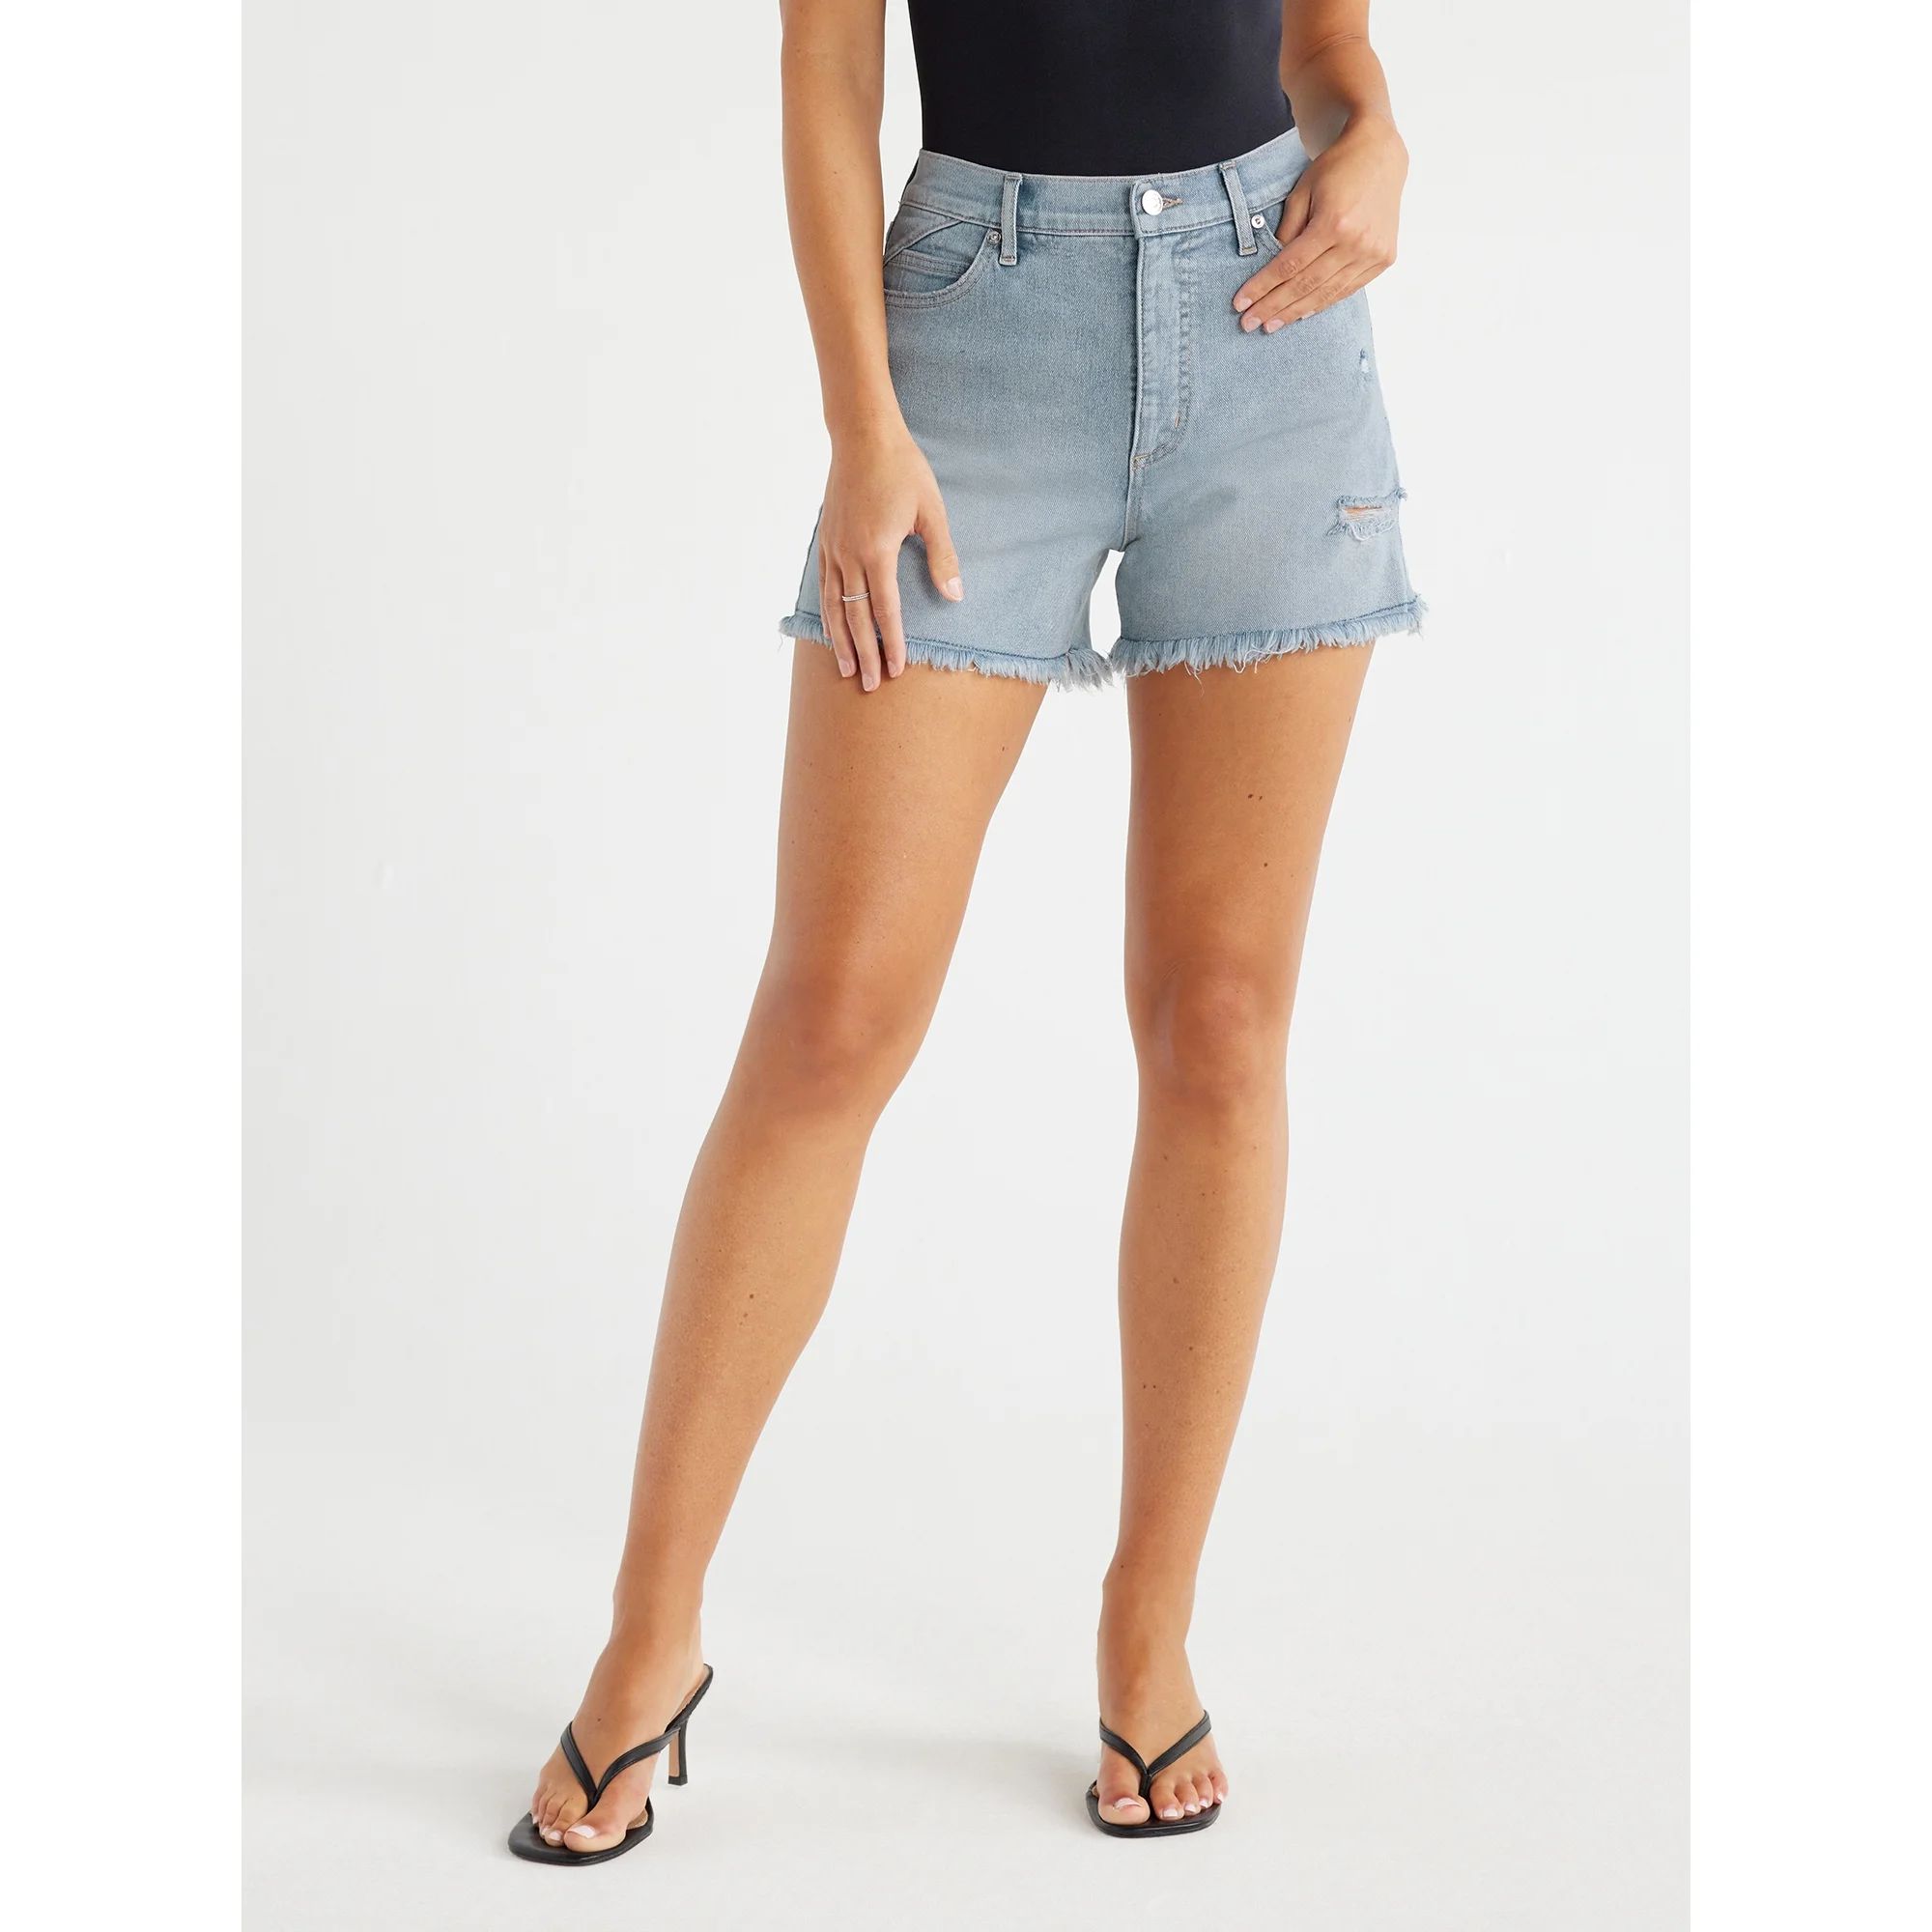 Sofia Jeans Women's Chi Shortie High Rise Fray Hem Shorts, 3.5" Inseam, Sizes 00-45 | Walmart (US)